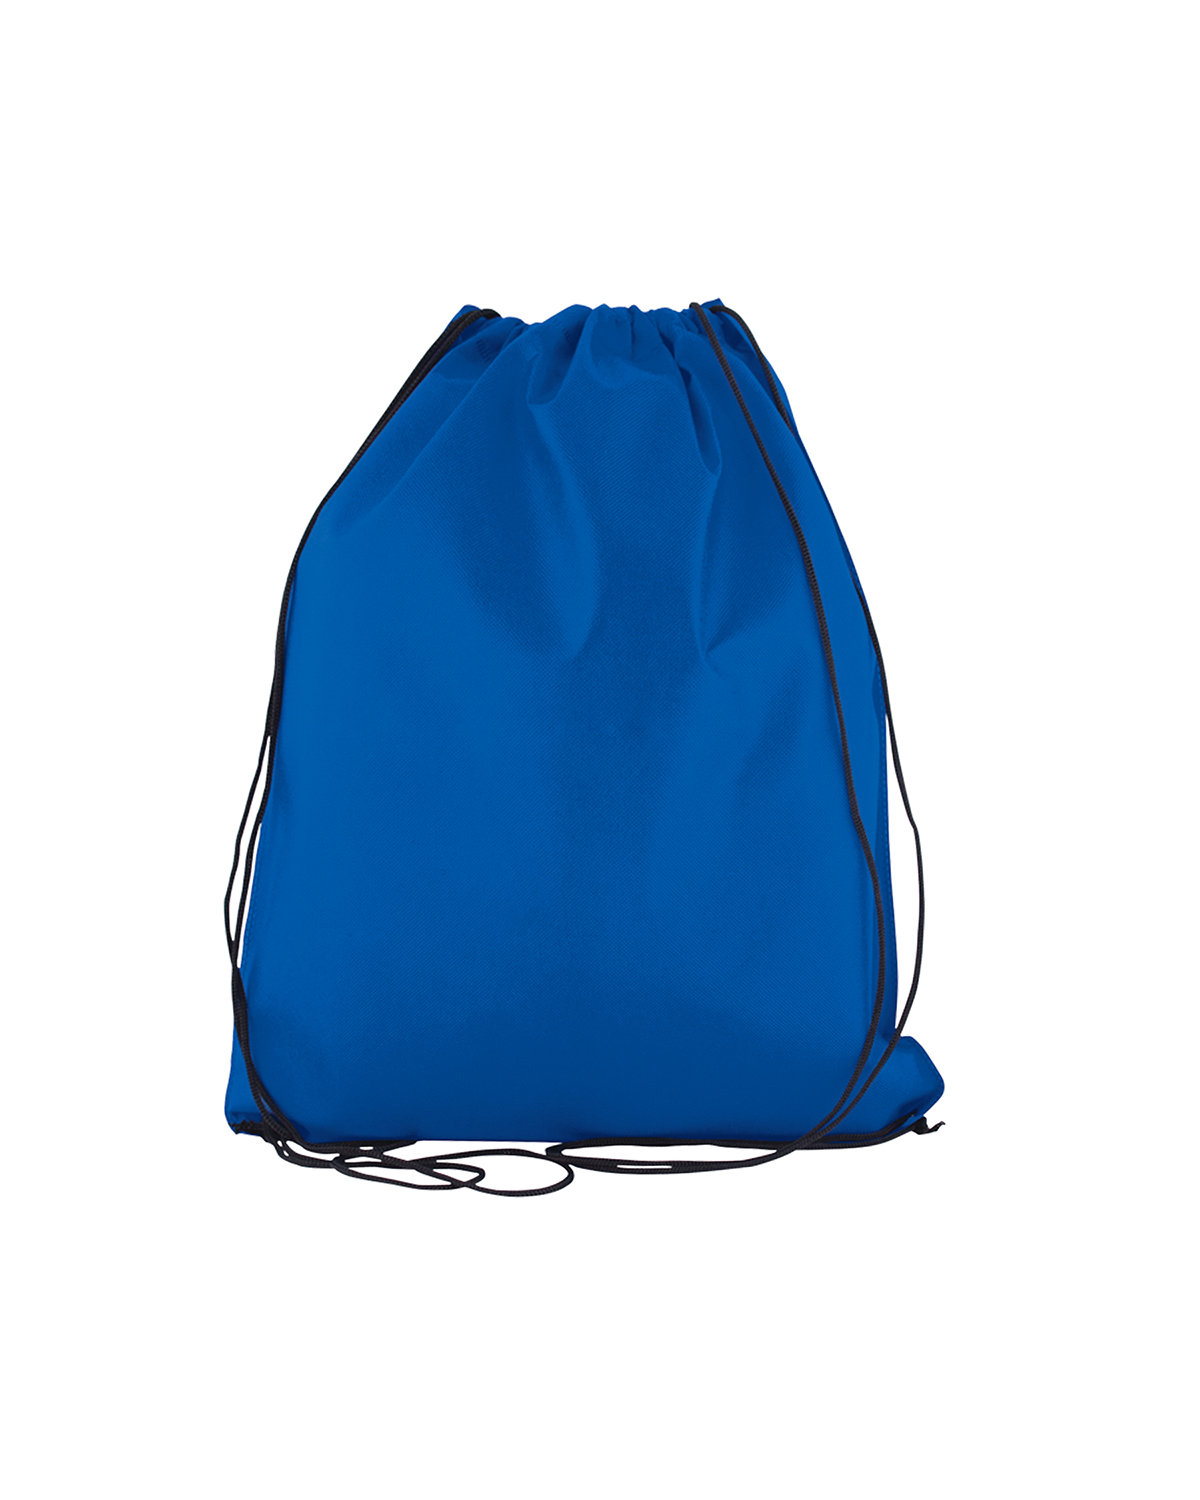 Buy Jumbo Non-Woven Drawstring Cinch-Up Backpack - Prime Line